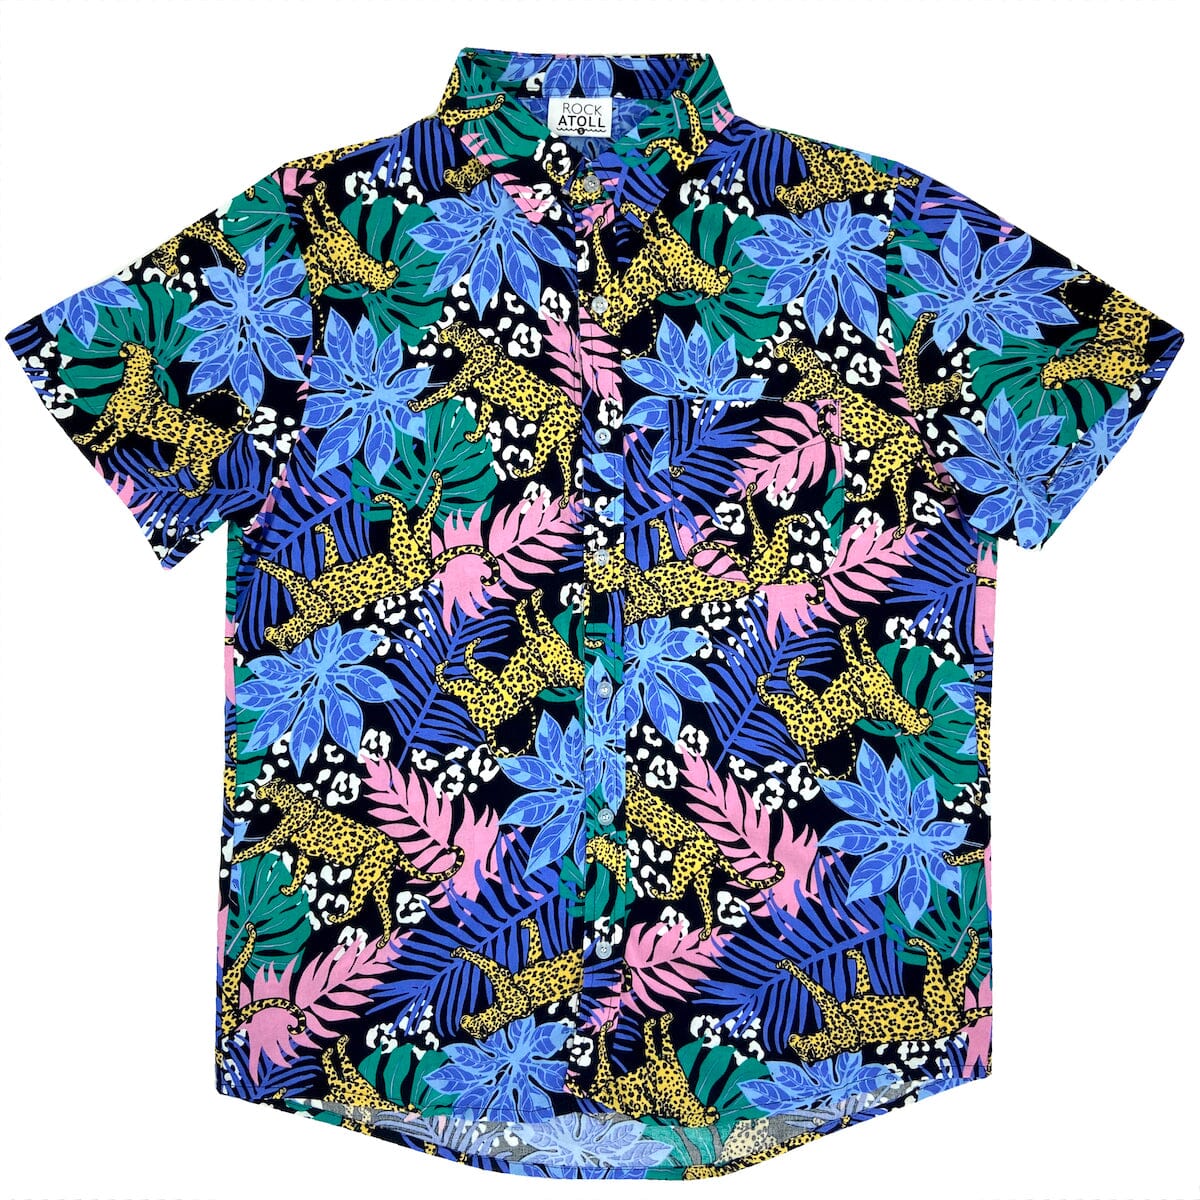 Men's Colorful Cheetah Patterned Soft Lightweight Button Down Shirt